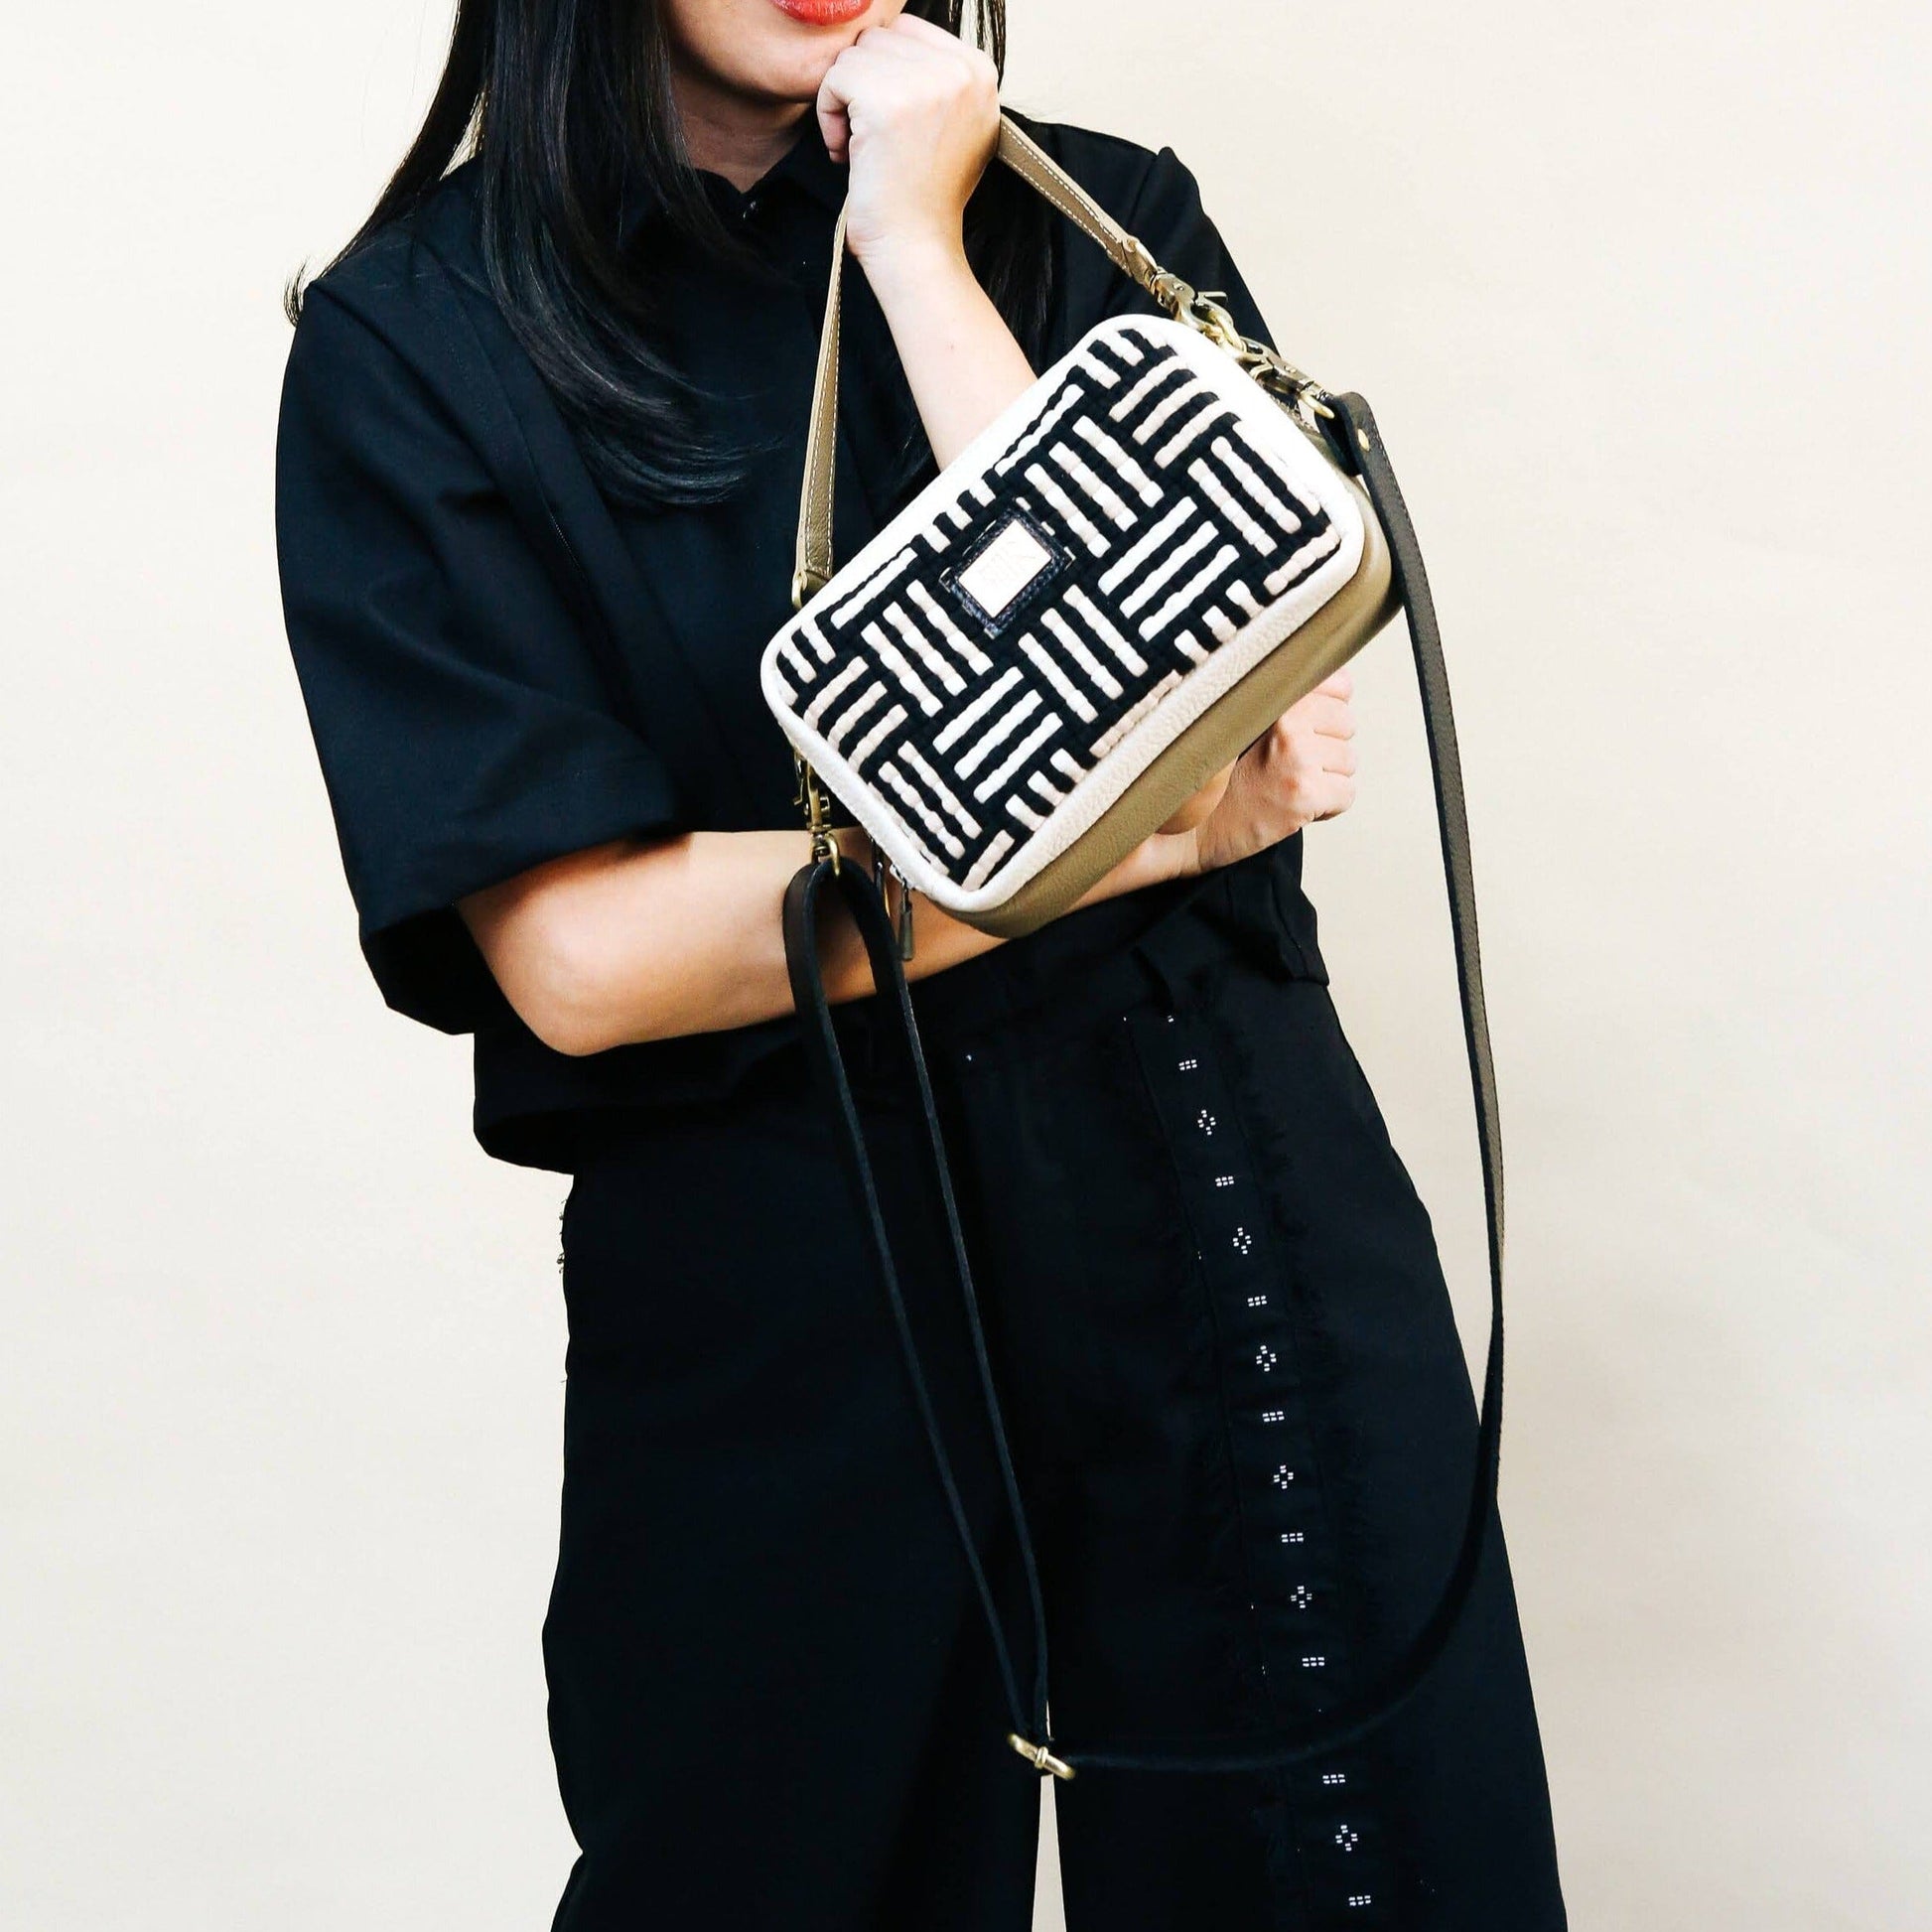 Bento Mat Pattern Black & Beige Fashion Rags2Riches